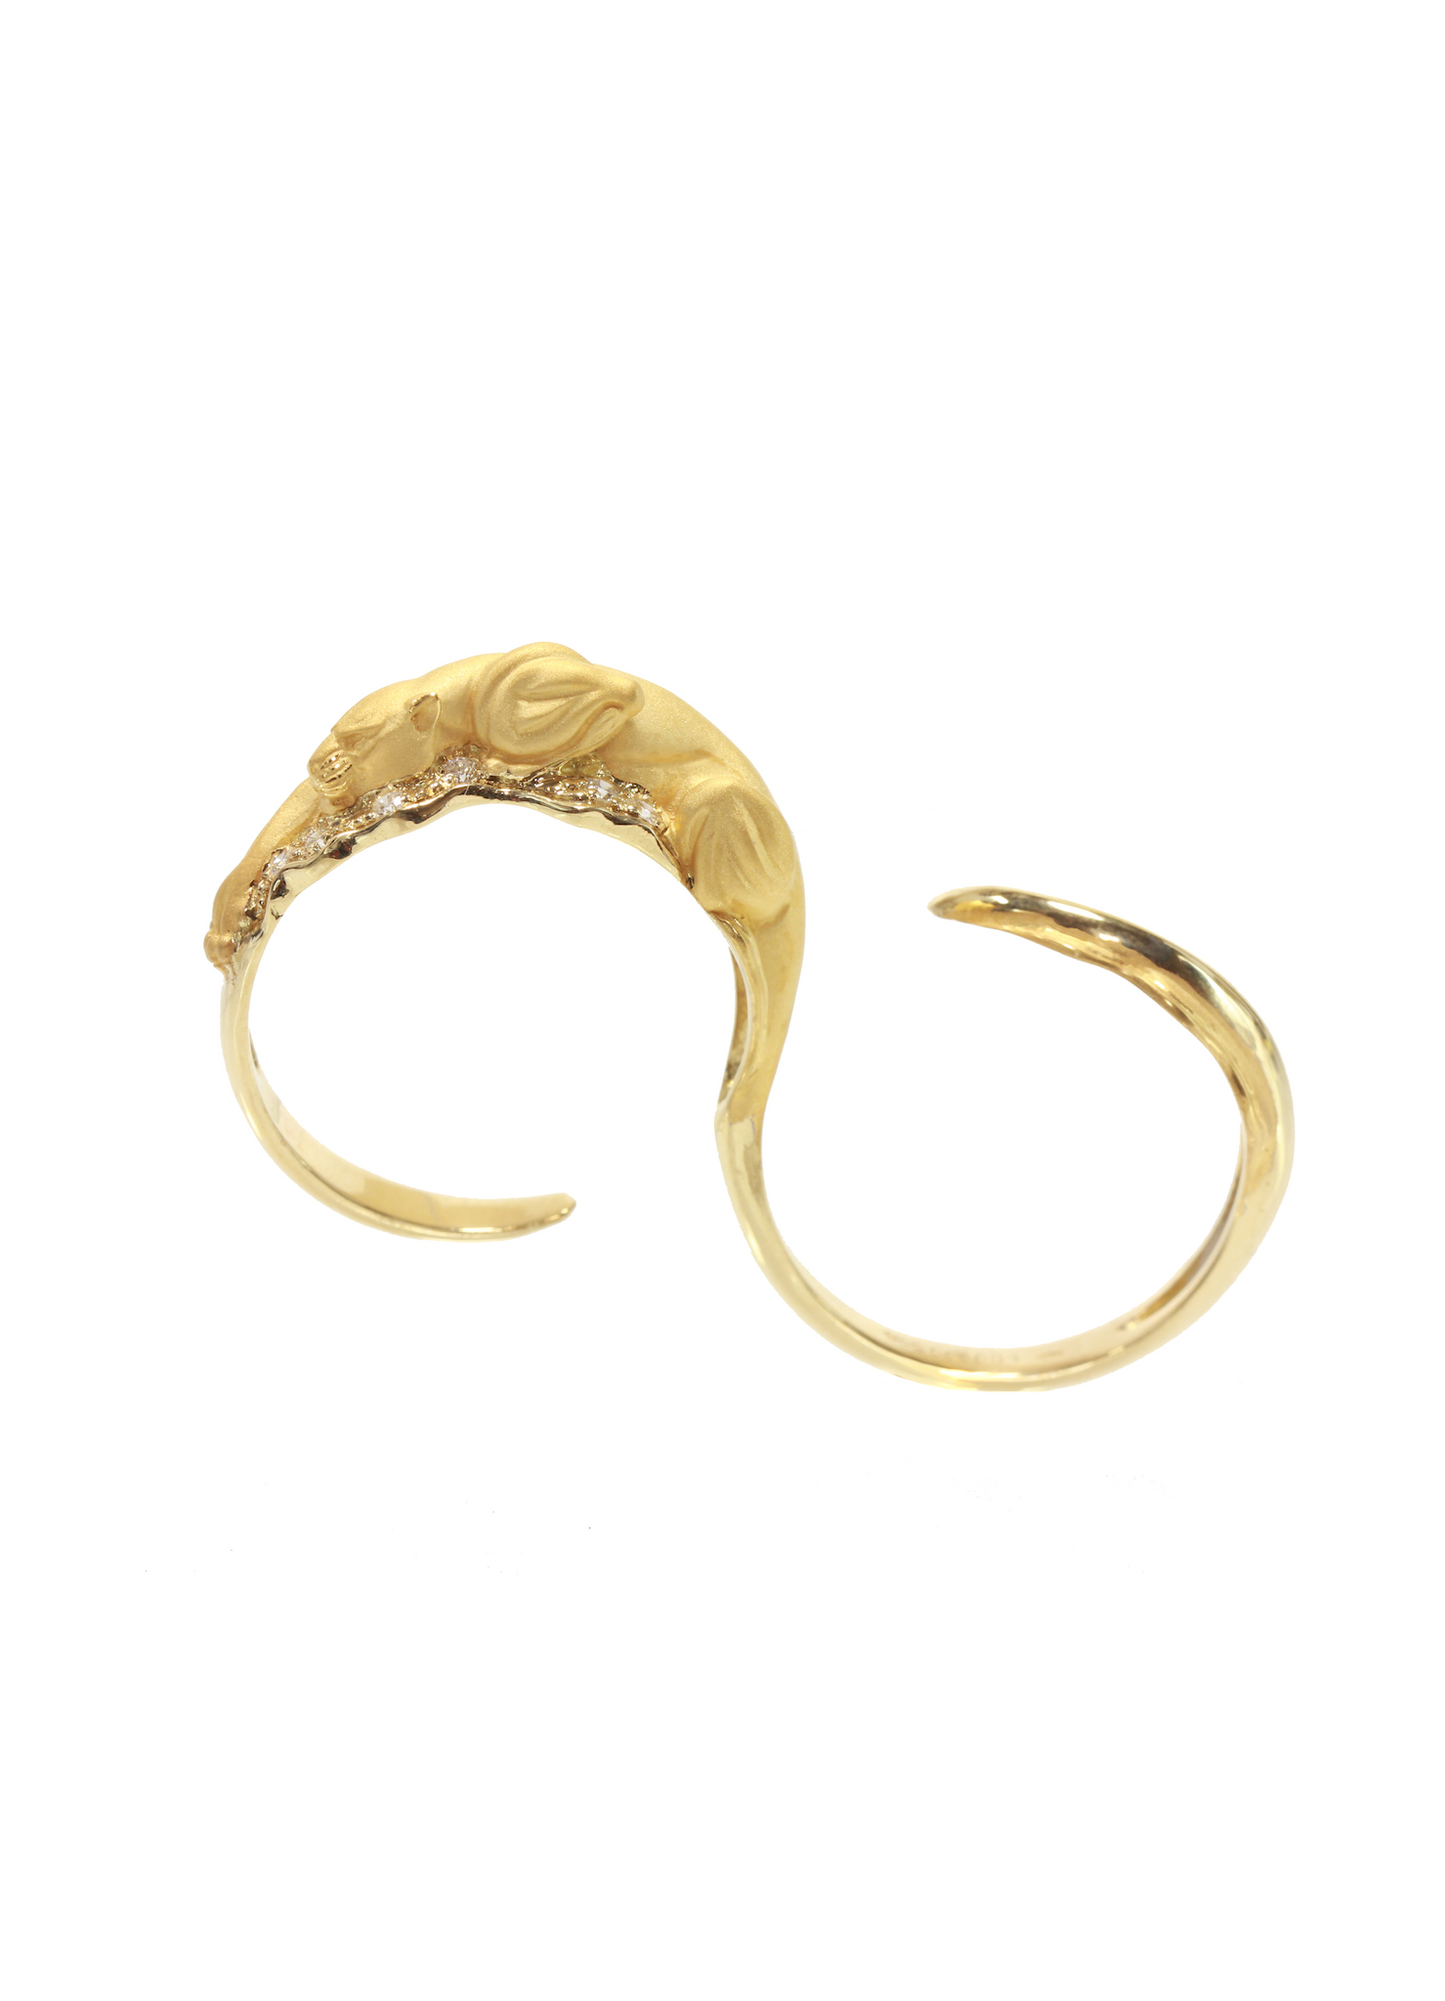 Gold Ring “GUARDIAN” - Manuel Carrera Cordon